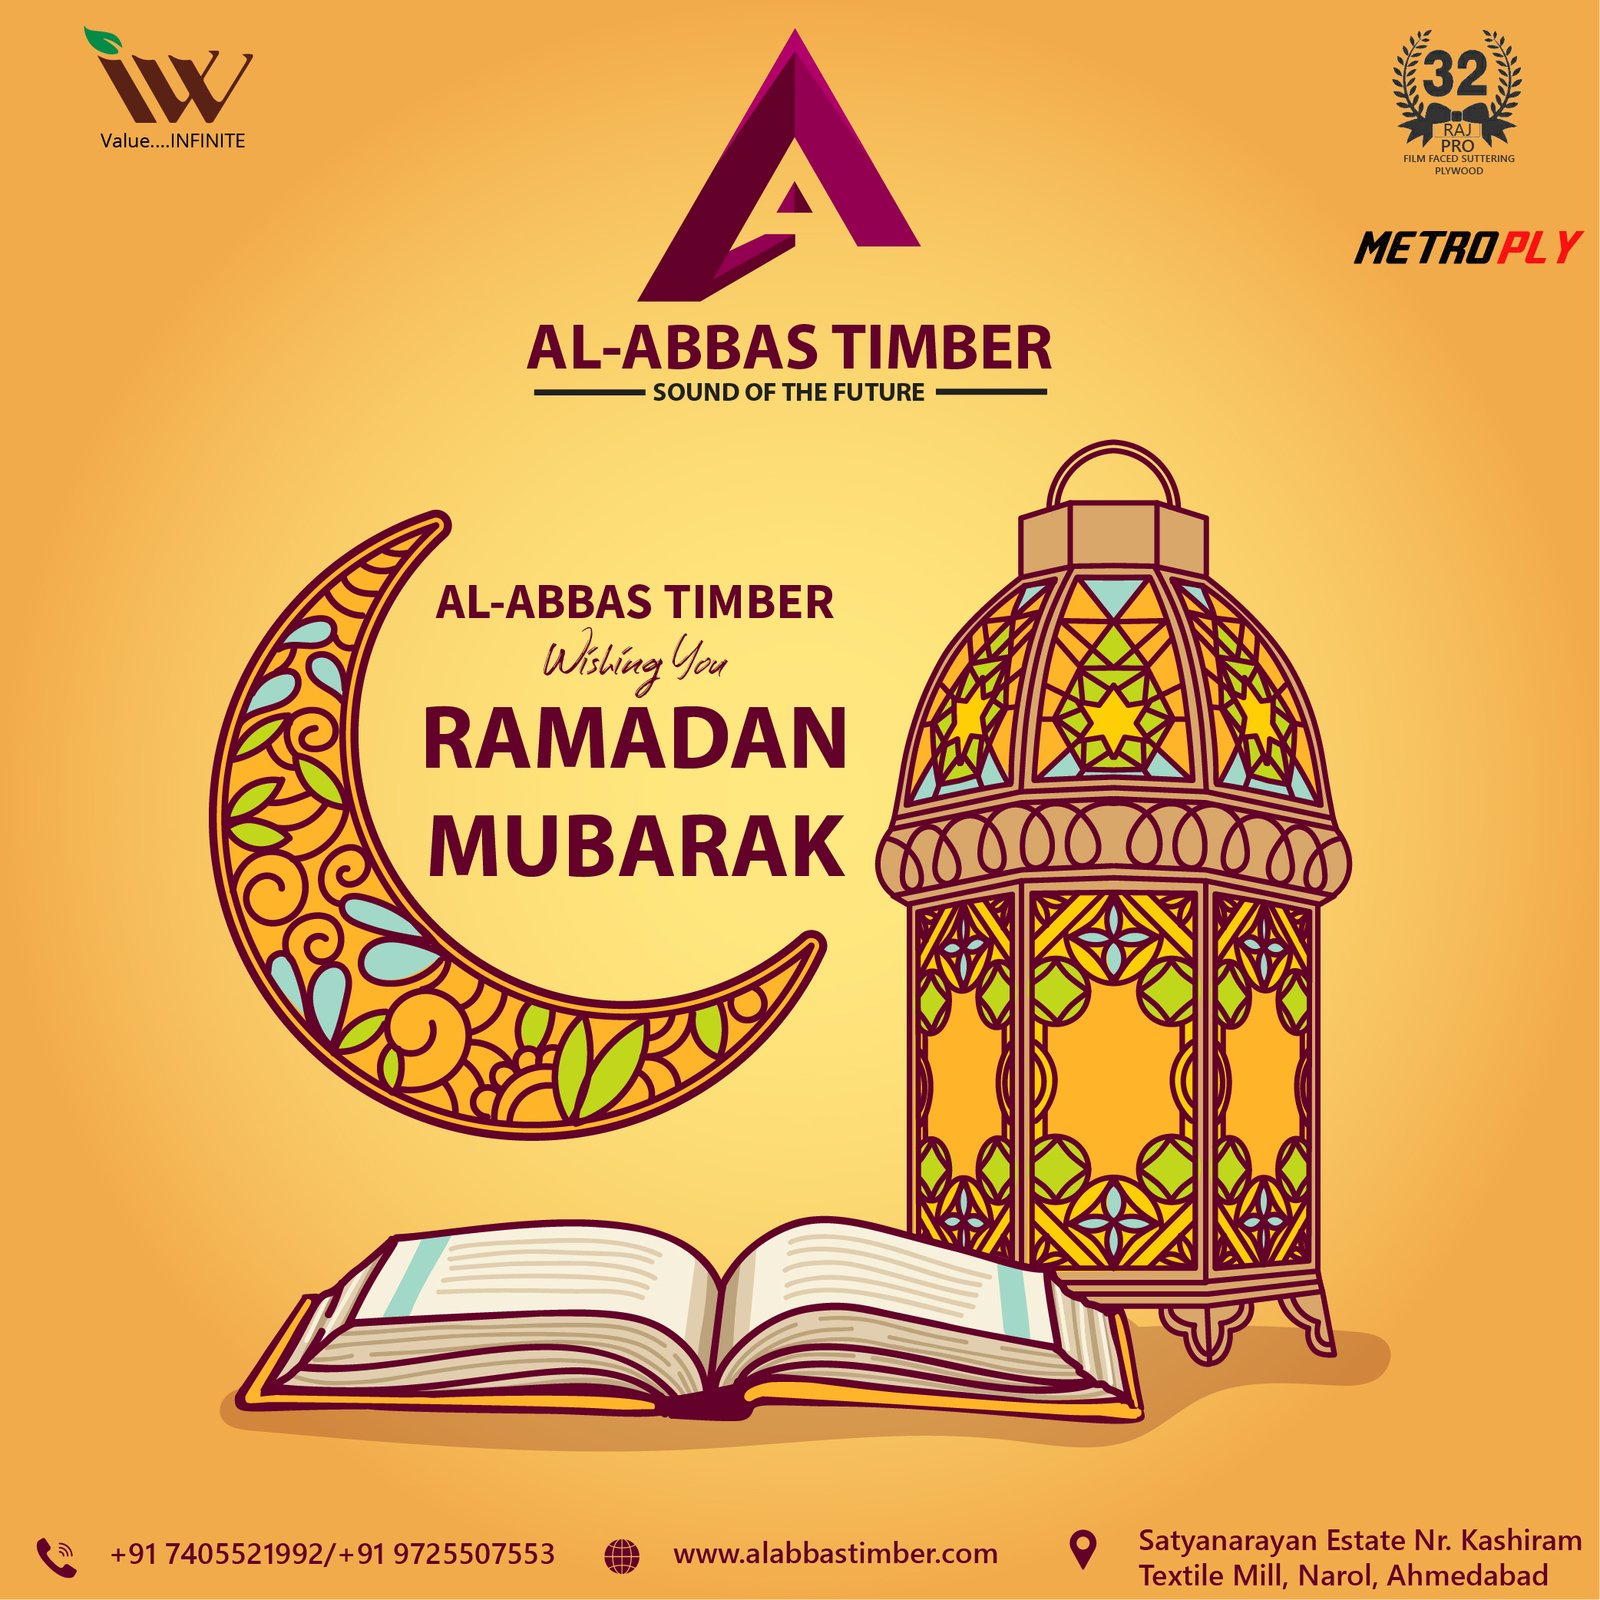 Ramadan mubarak festival post design for al abbas timber by badri design